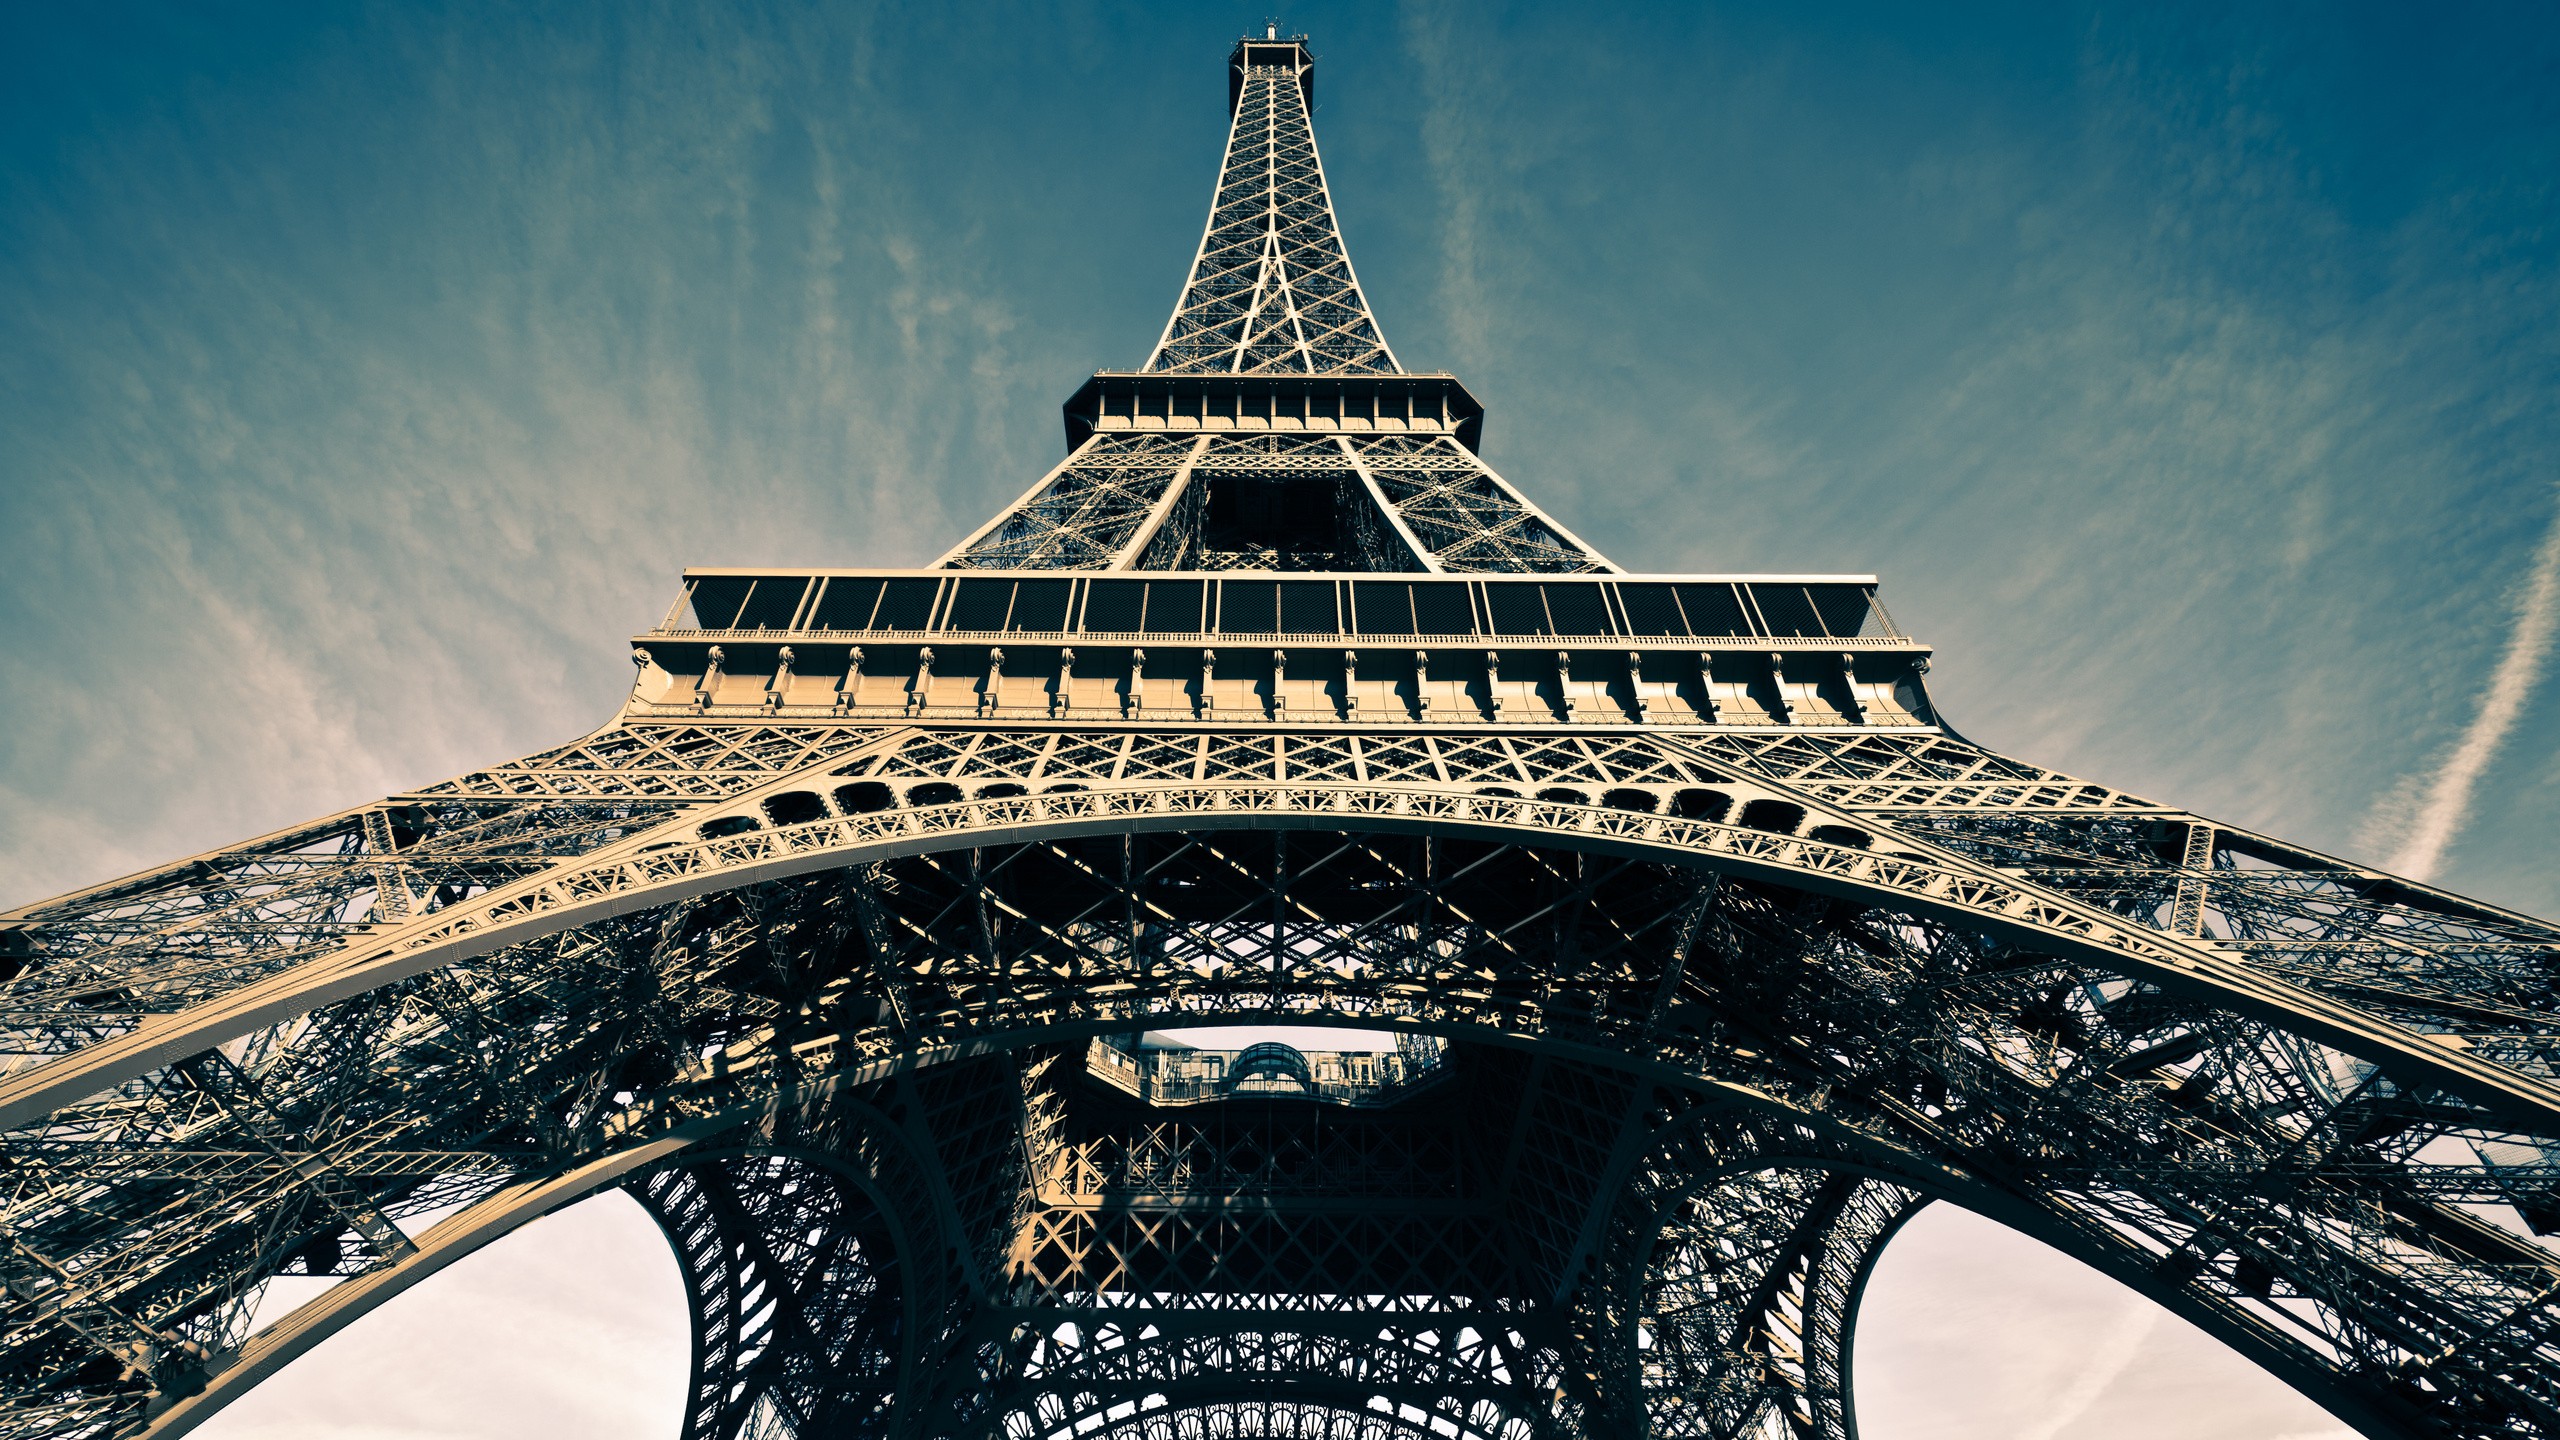 General 2560x1440 Eiffel Tower Paris sky low-angle landmark France